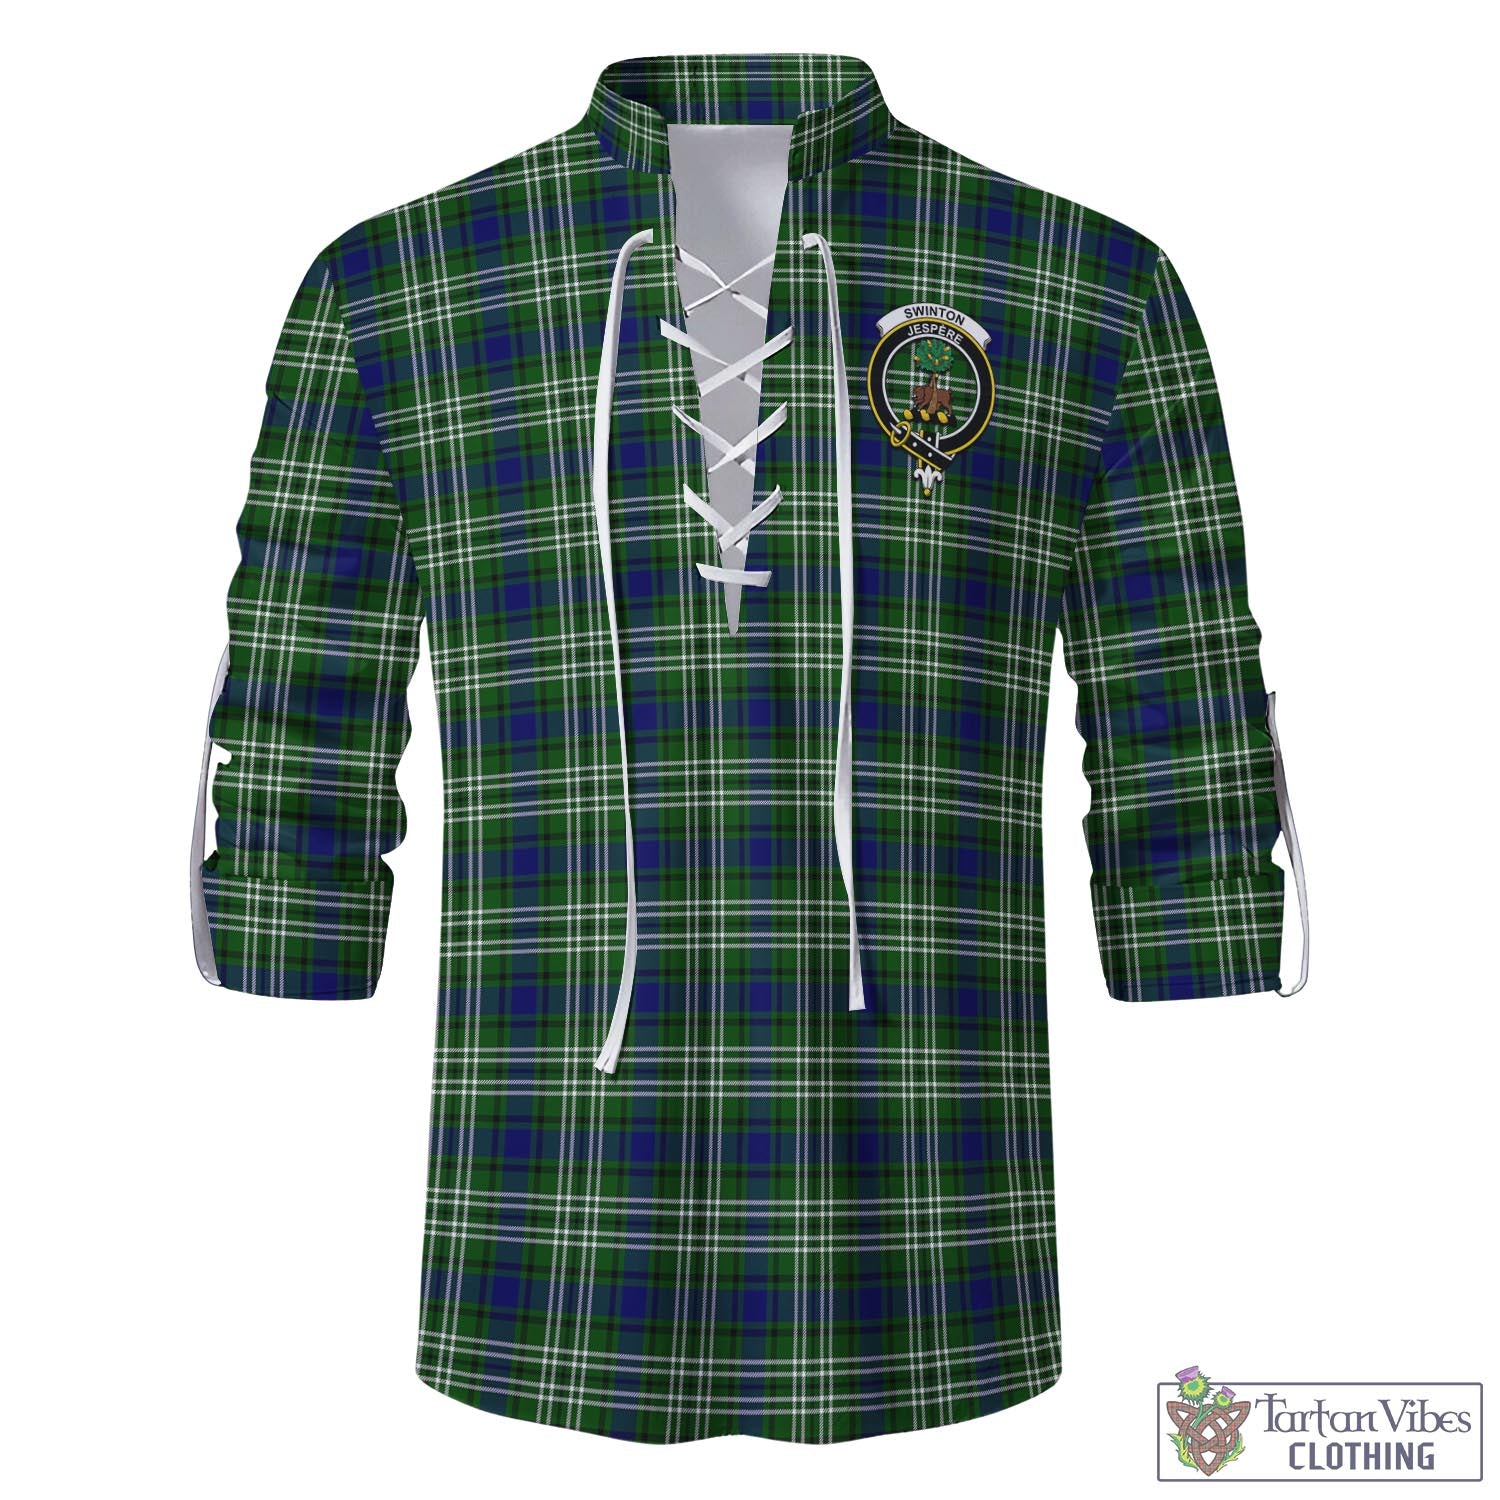 Tartan Vibes Clothing Swinton Tartan Men's Scottish Traditional Jacobite Ghillie Kilt Shirt with Family Crest